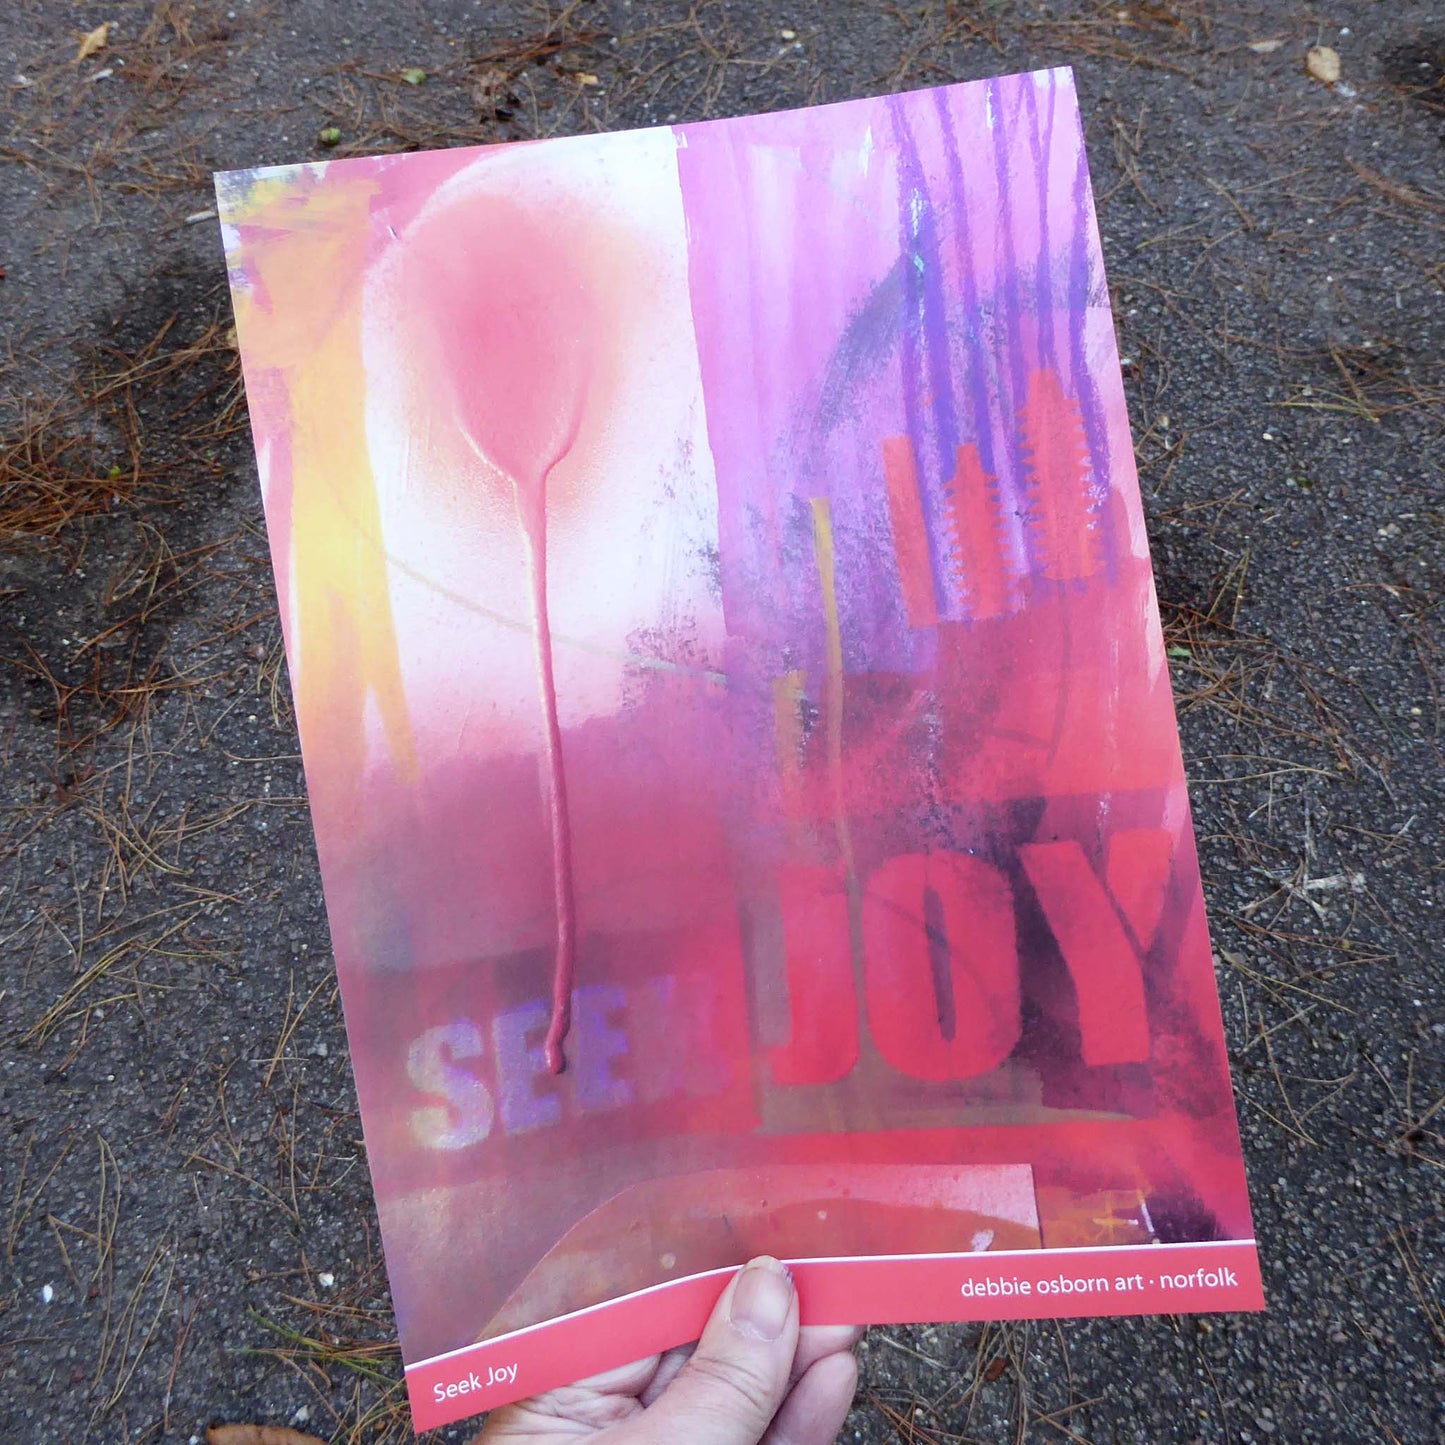 Poster - 'Seek Joy' - Reproduction of Original Artwork by Norfolk based artist Debbie Osborn